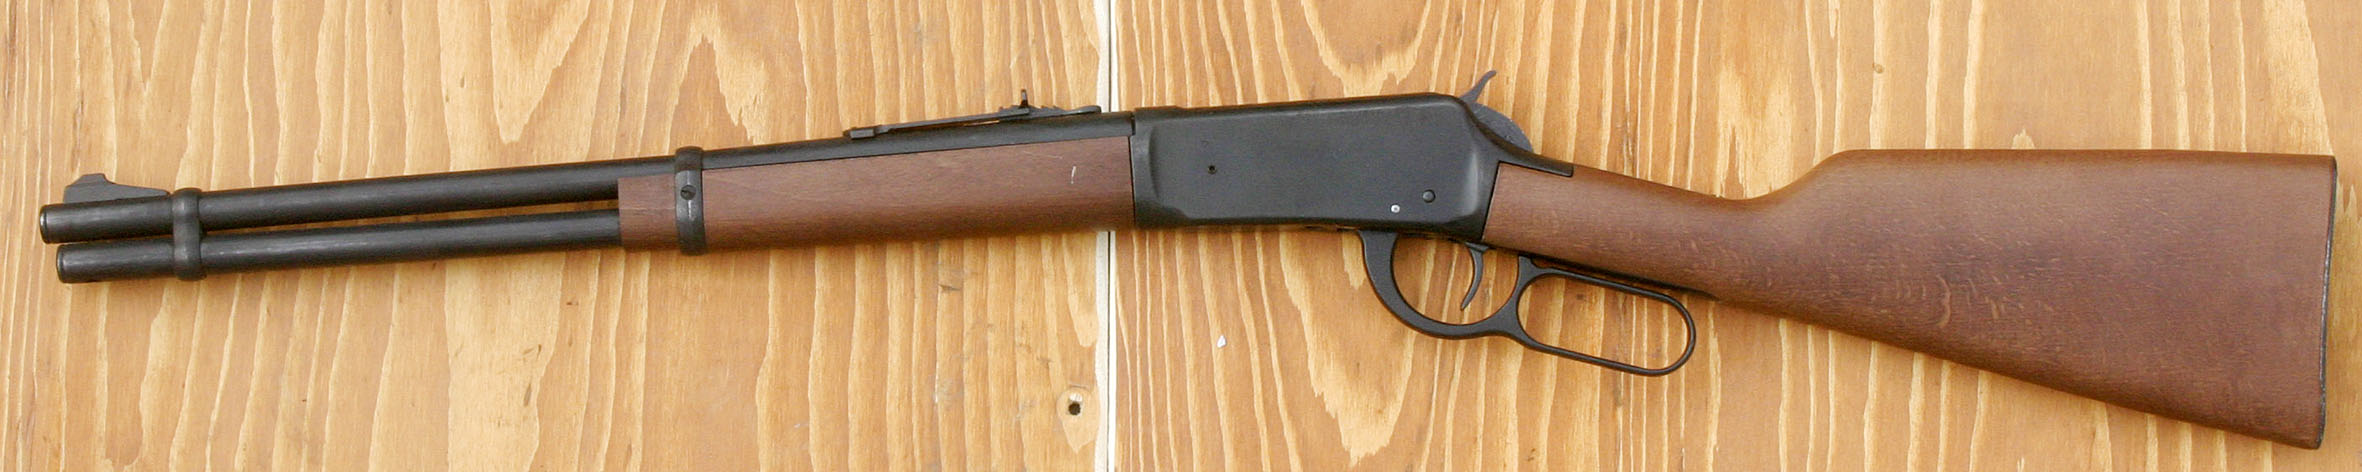 West & Dollies - Riproduzione Fucile Winchester a Salve.